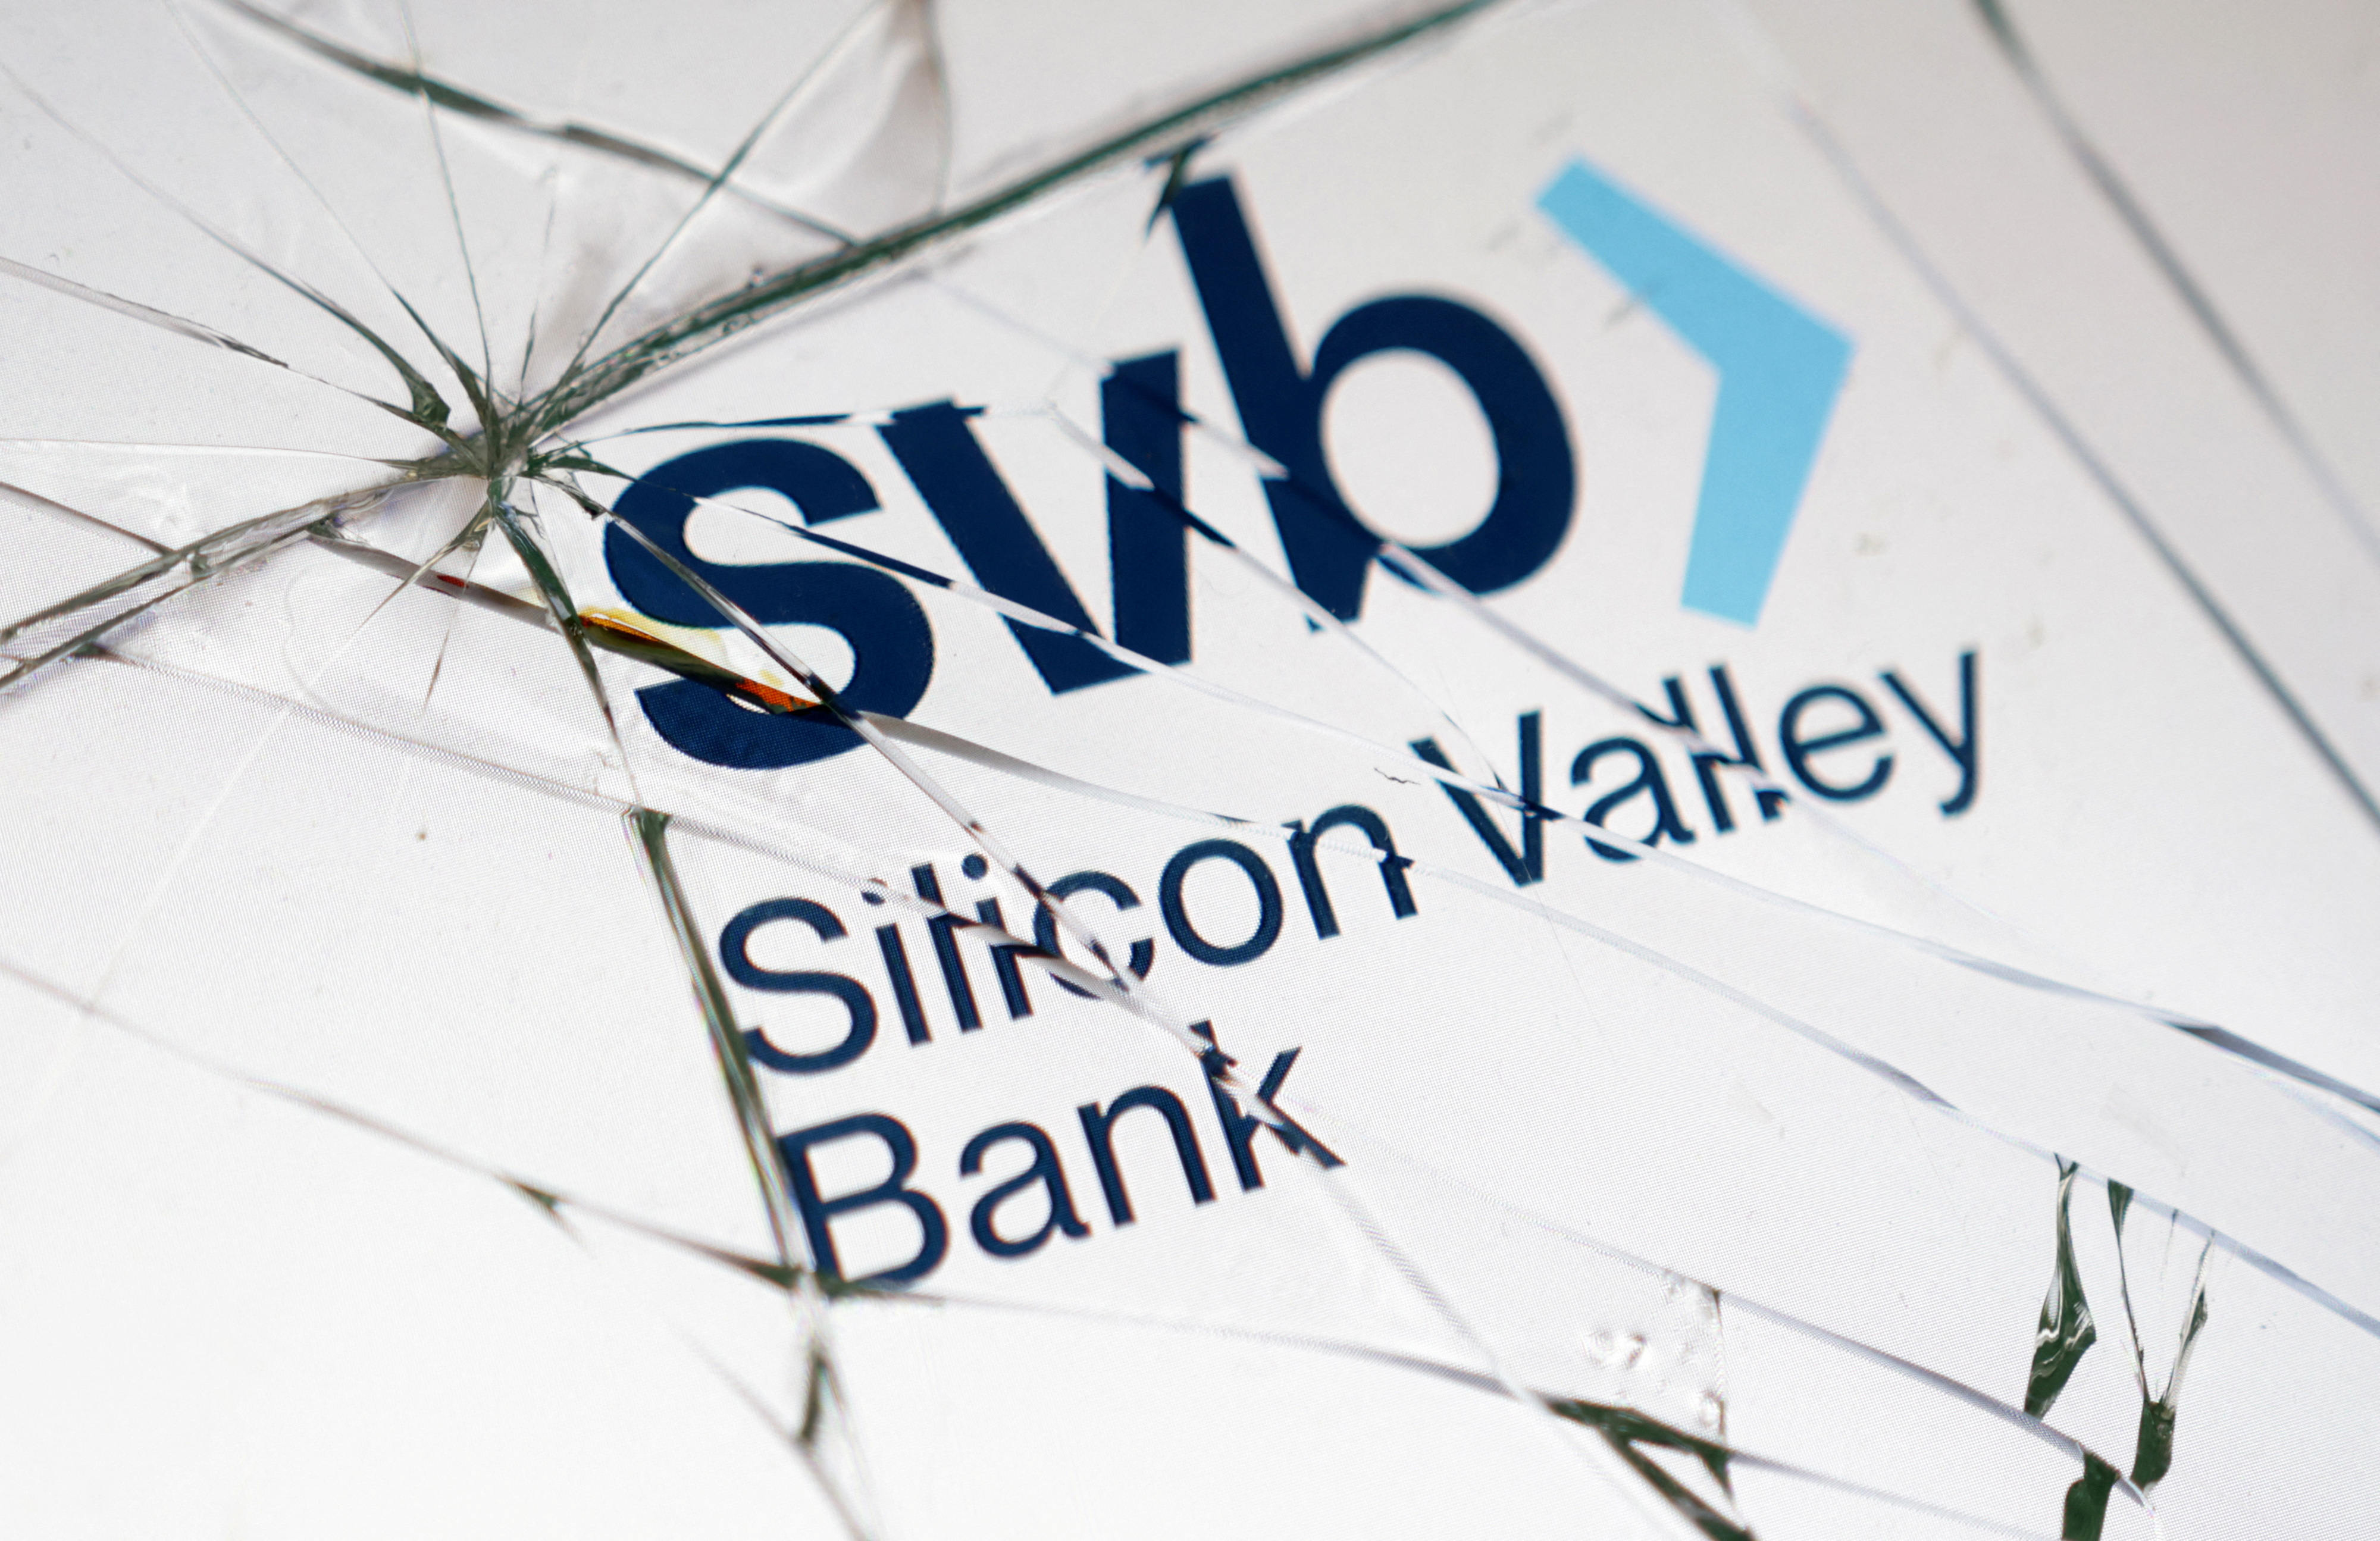 Illustration shows Silicon Valley Bank logo